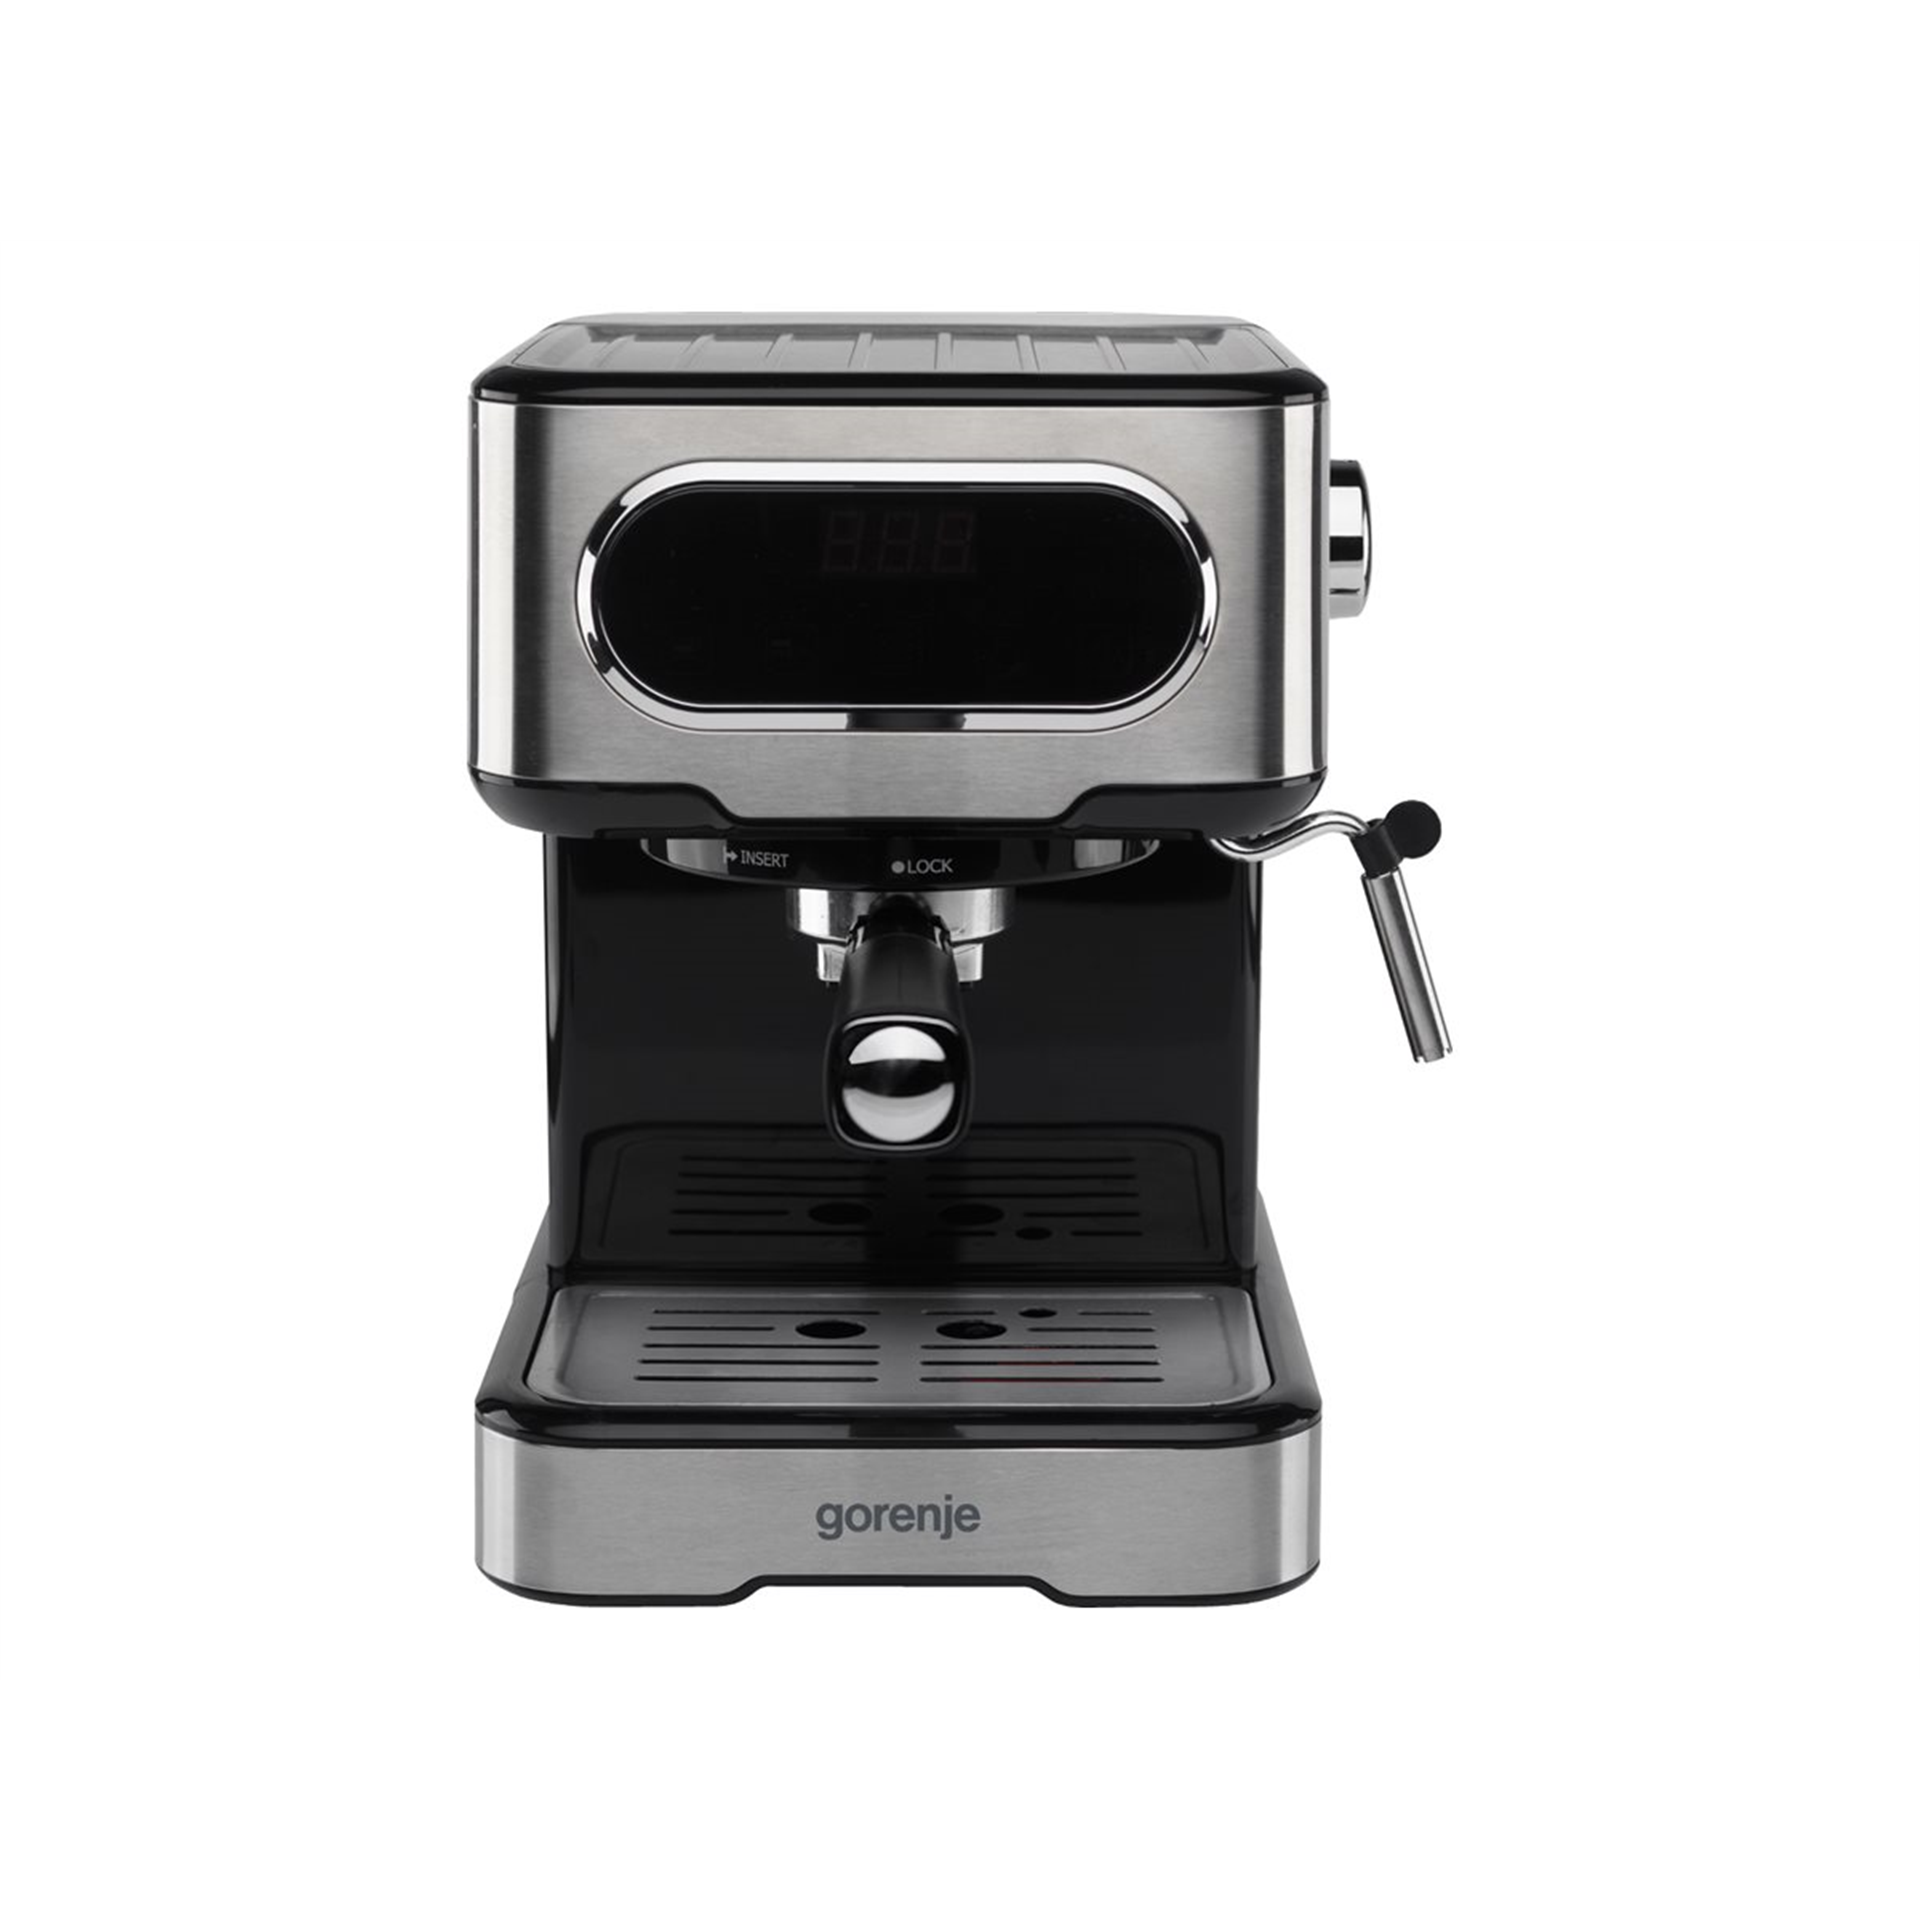 Gorenje Coffee machine ESCM15DBK Pump pressure 15 bar Built-in milk frother Manual 1100 W Stainless steel